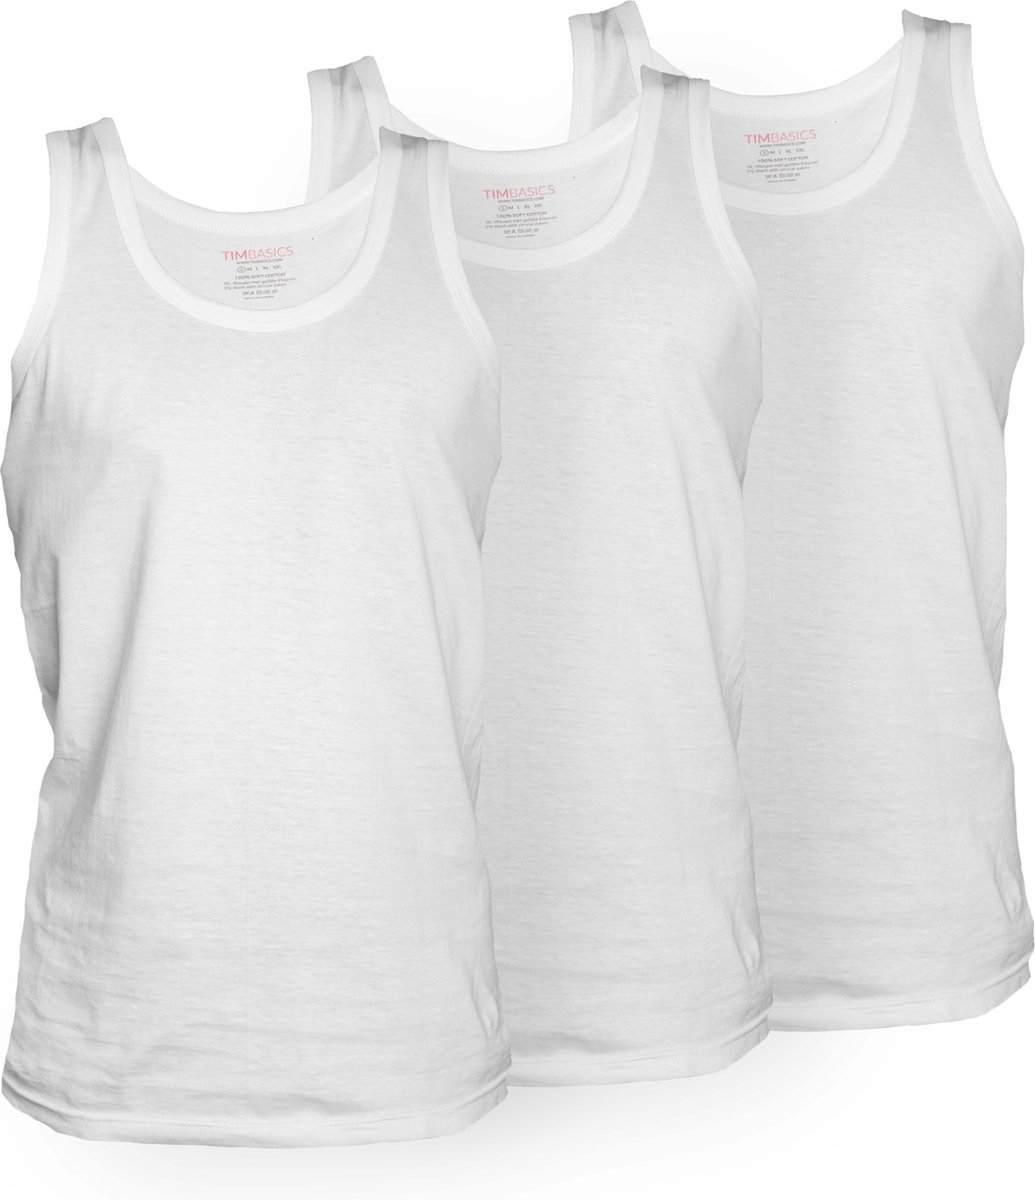 TimBasics - 100% Katoen - Heren Onderhemd - 3-Pack - Wit - XL - Tanktop heren - Onderhemden heren